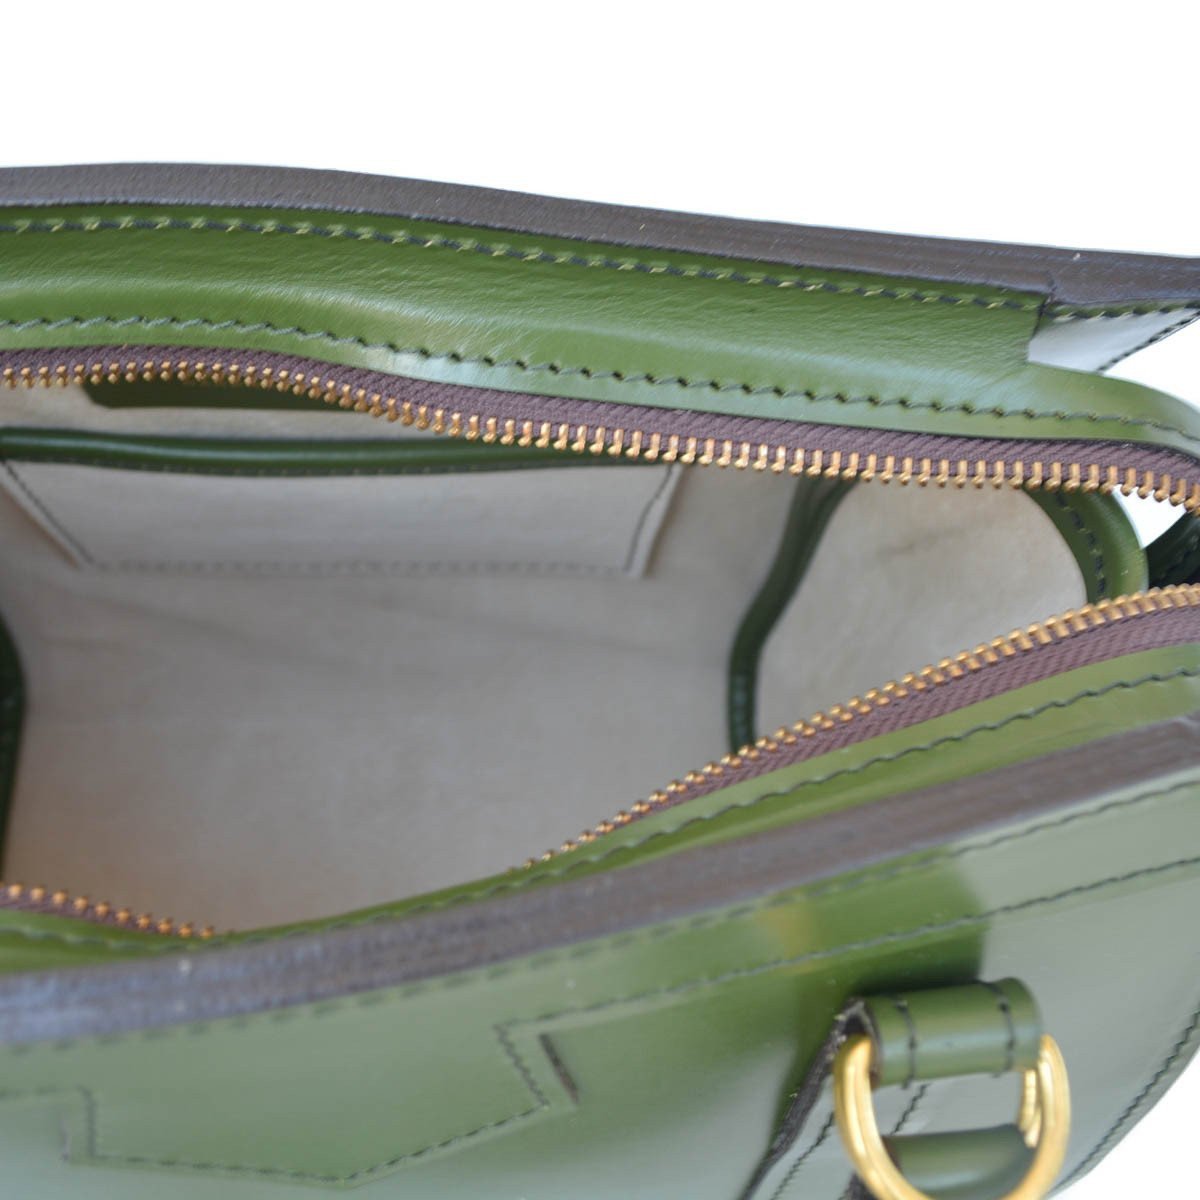 Petite Beatrice Handbag, Cypress | Hand Stitched | Green English Bridle Leather | Small Luxury Handbag-Handbag-Sterling-and-Burke